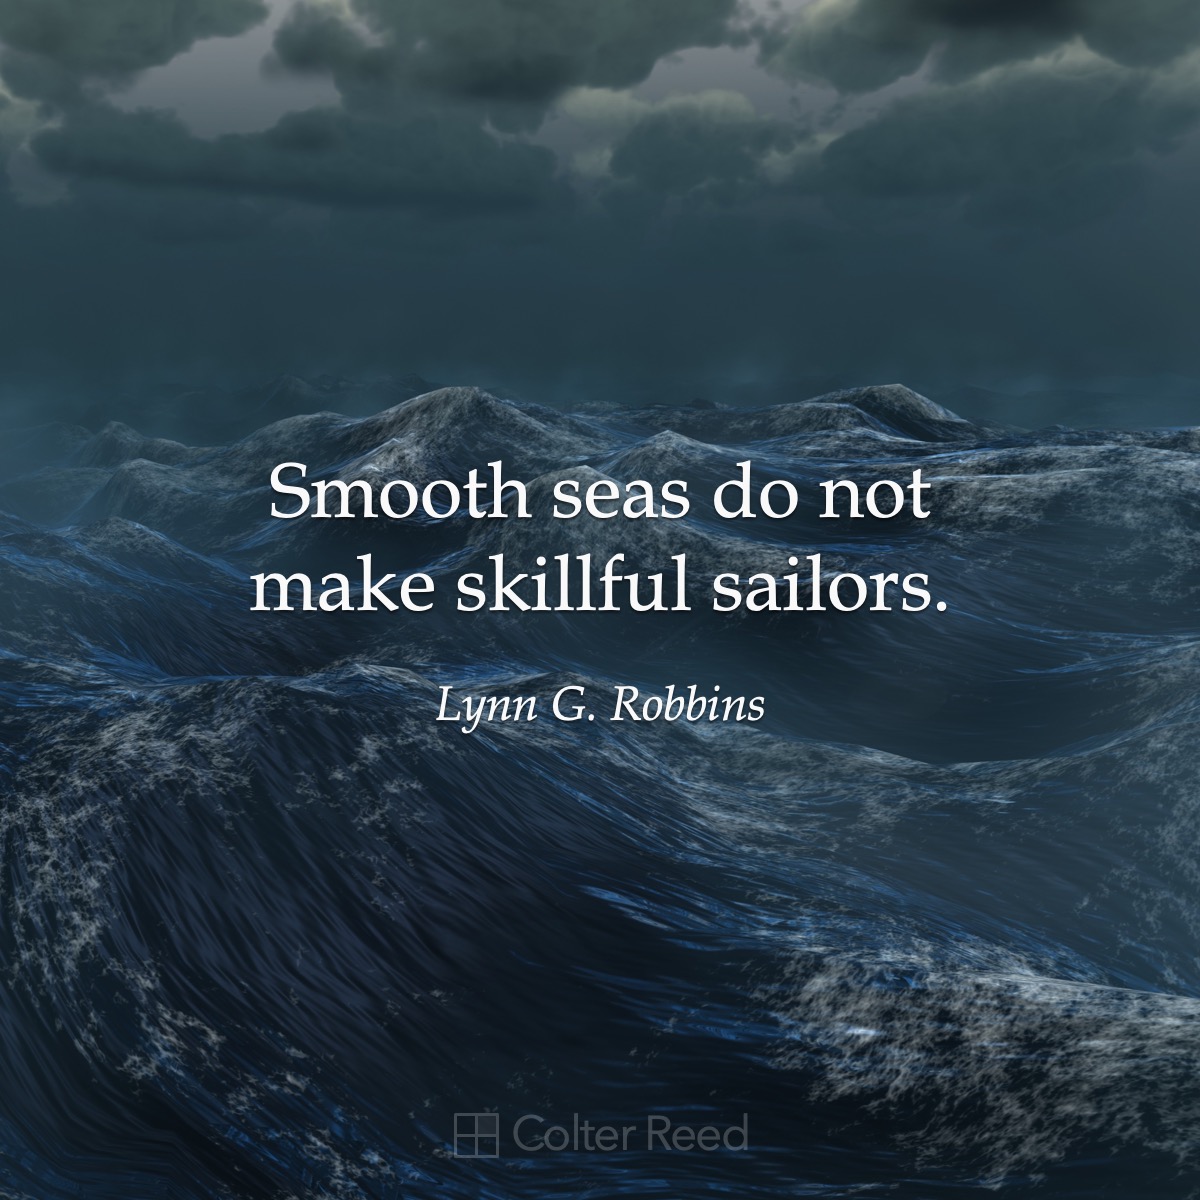 Smooth seas do not make skillful sailors. —Lynn G. Robbins